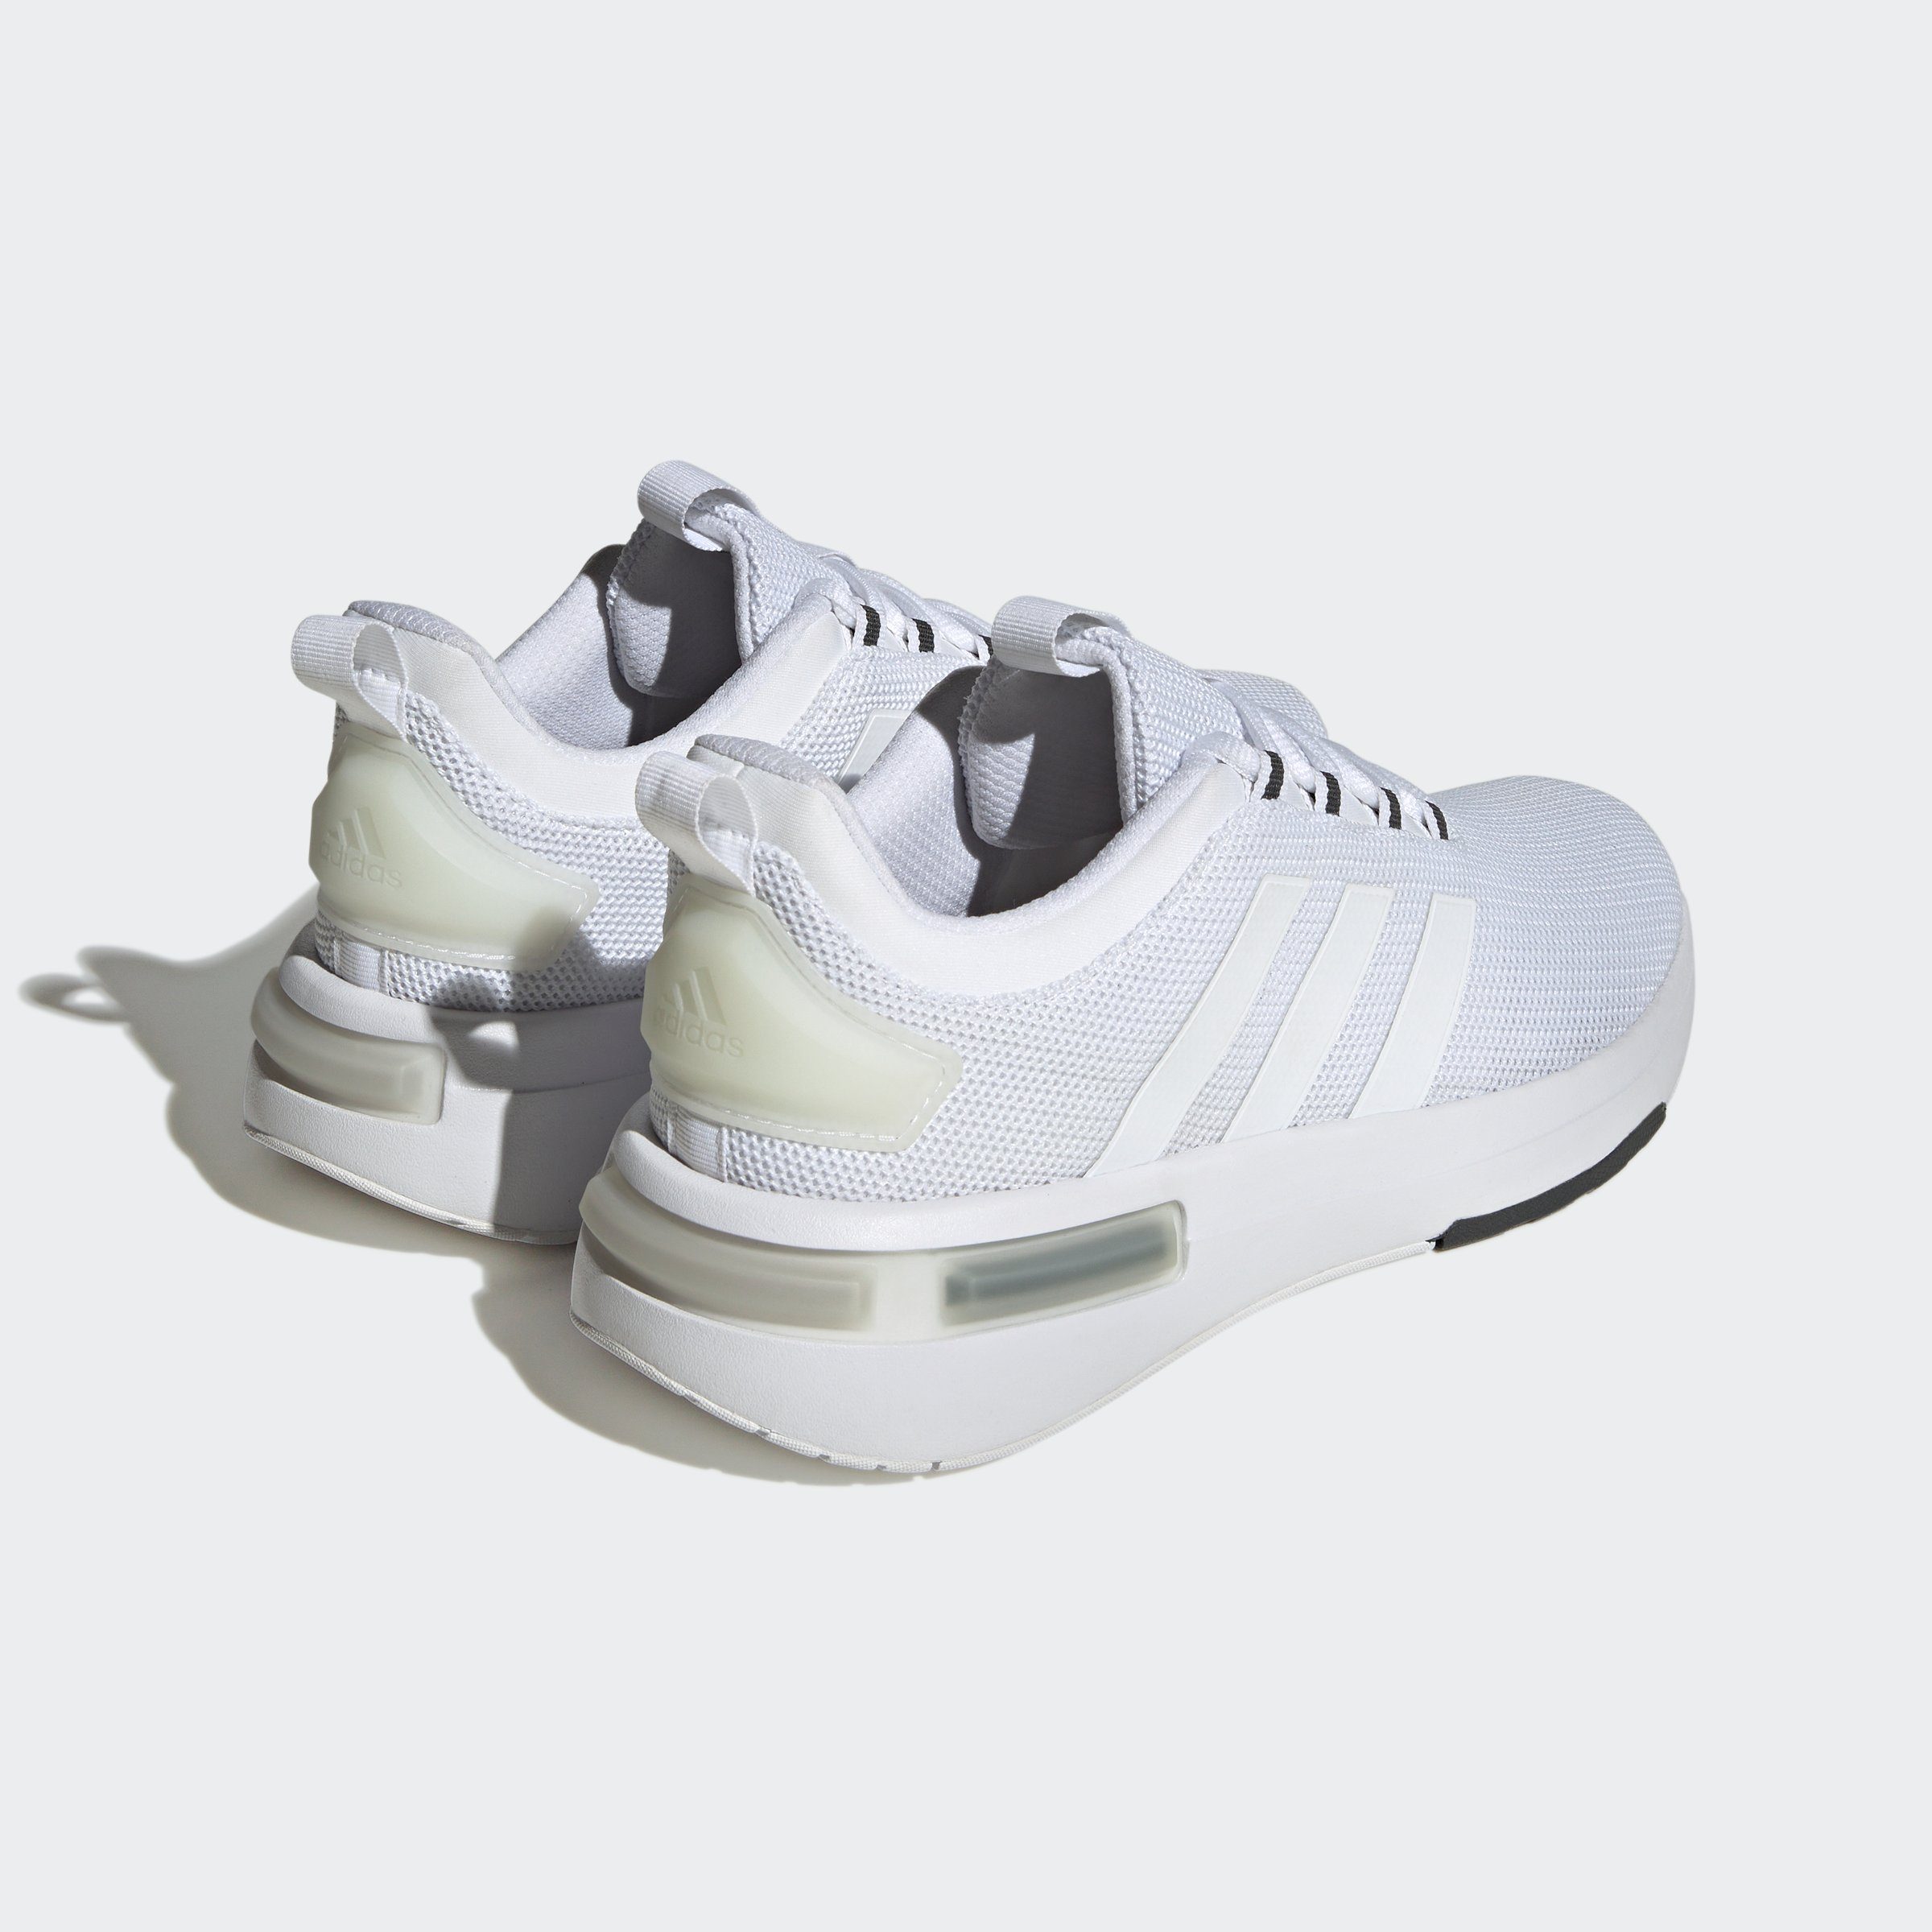 / Sneaker Cloud Grey Cloud Sportswear / TR23 RACER adidas White White Six